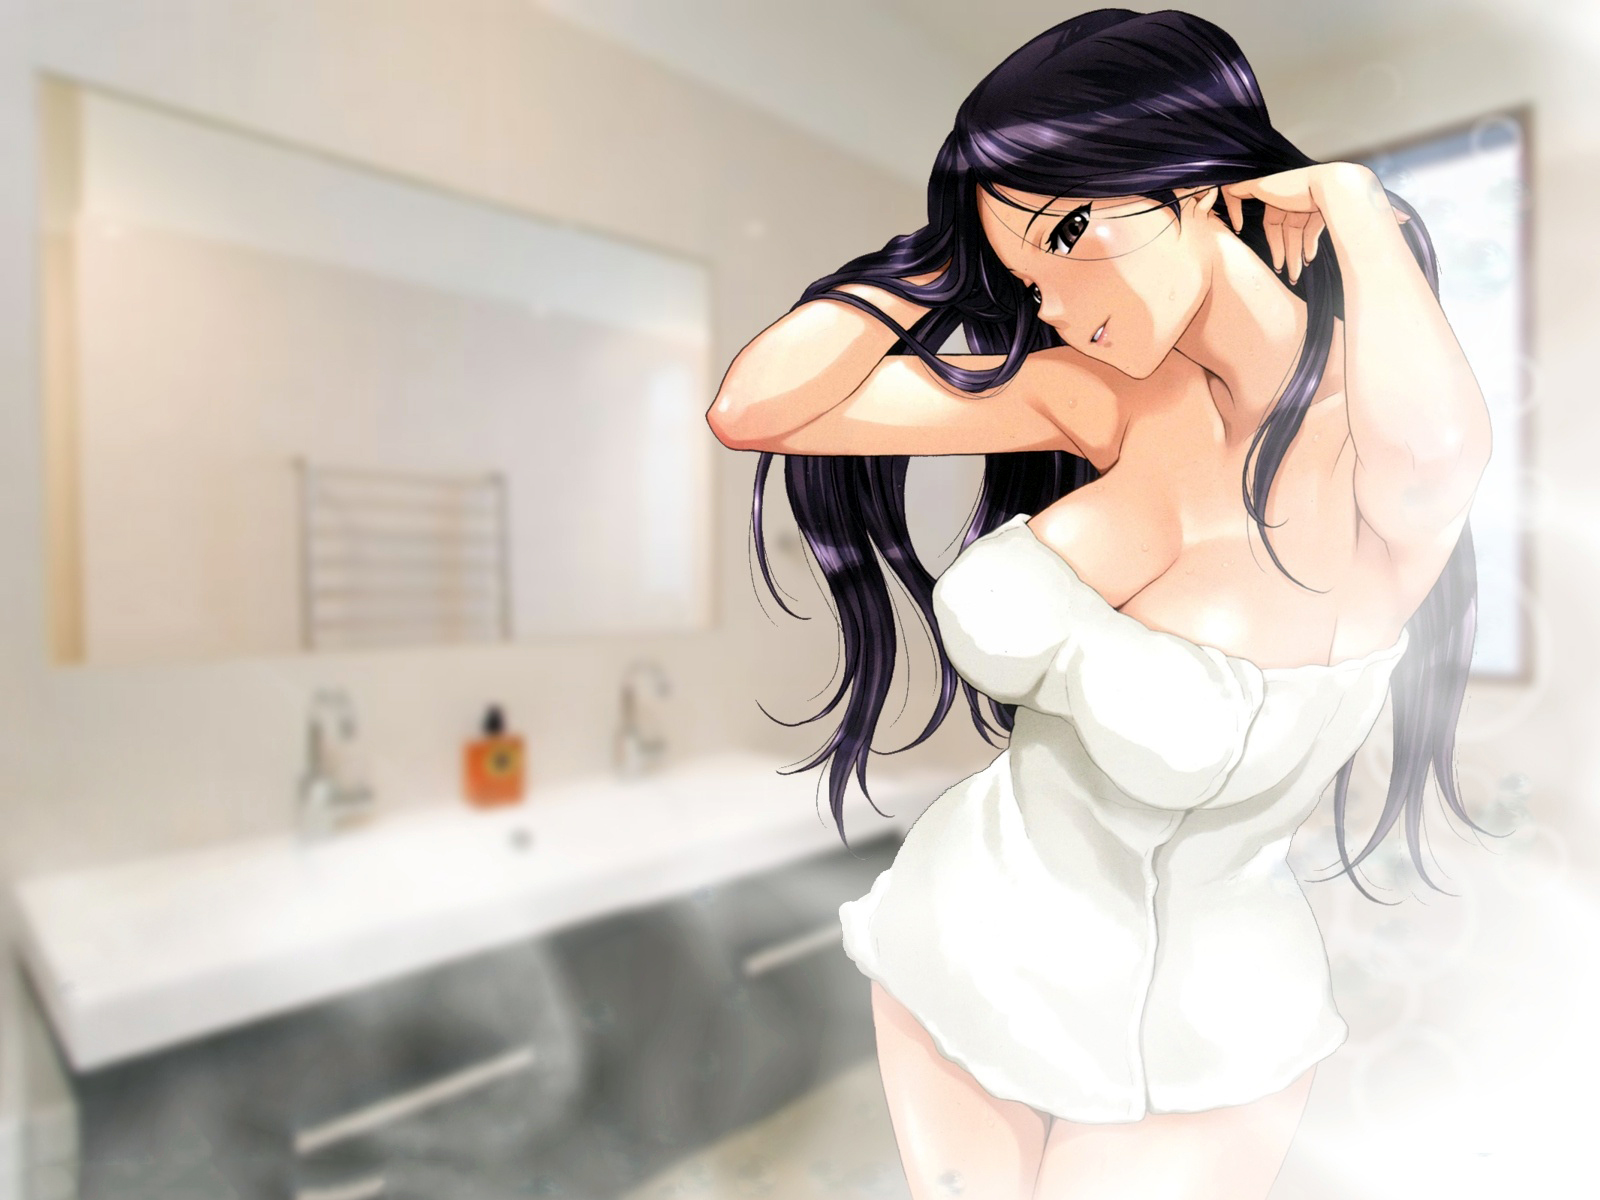 http://media.moddb.com/images/groups/1/1/84/Anime_girl_-_bathroom.jpg